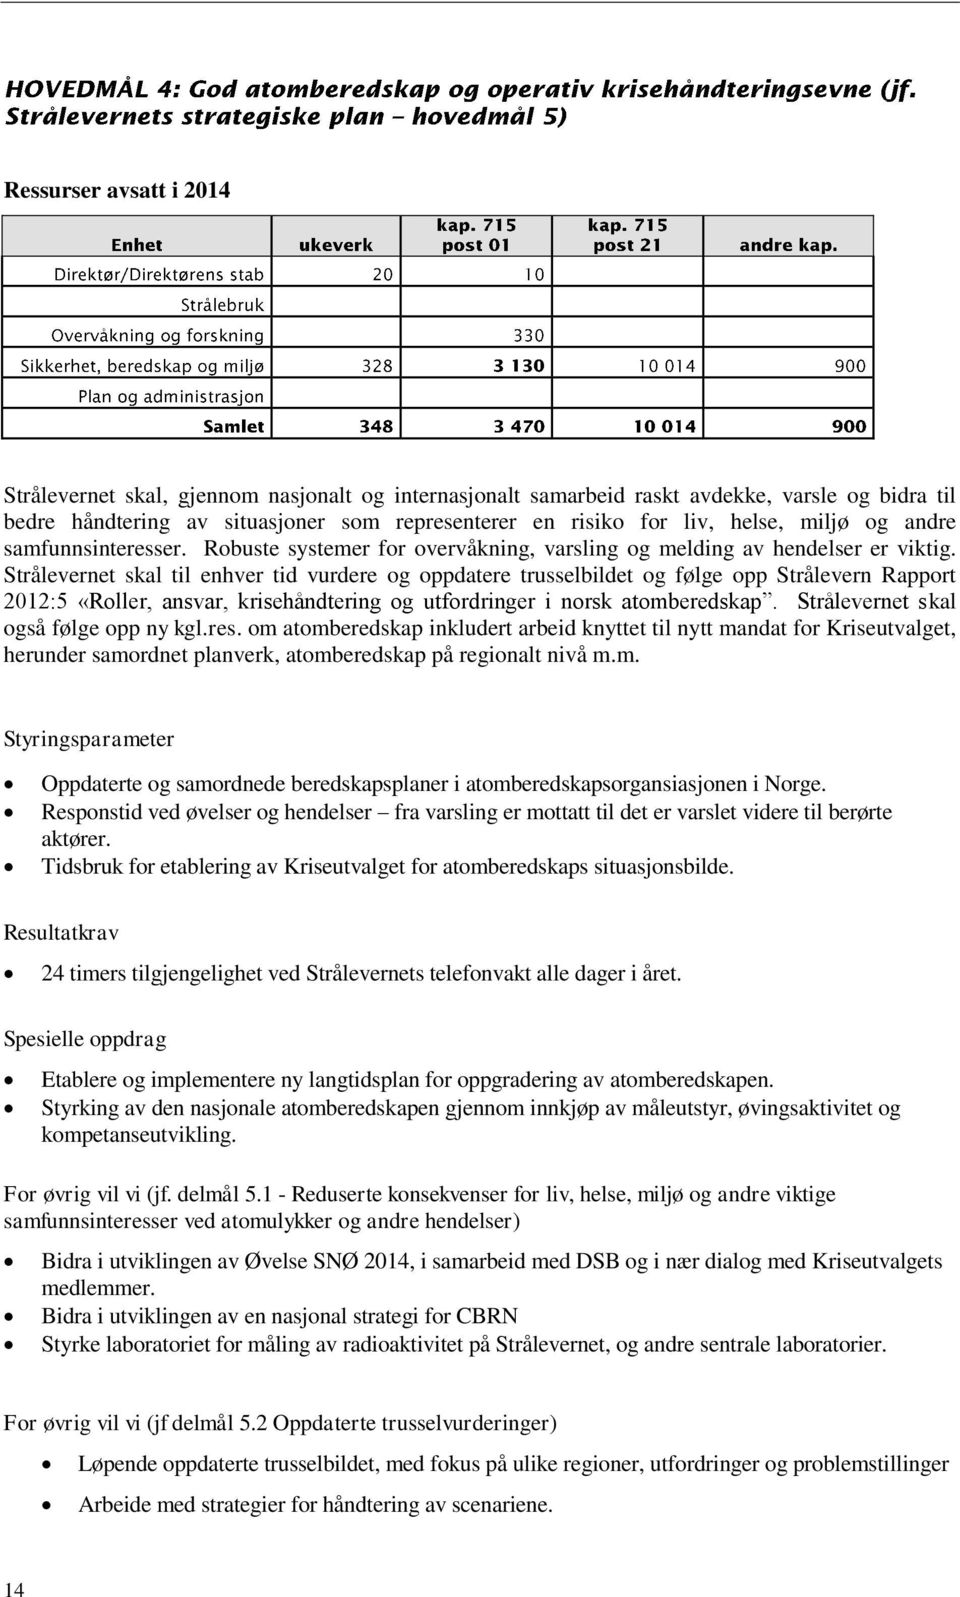 Strålevernet skal til enhver tid vurdere og oppdatere trusselbildet og følge opp Strålevern Rapport 2012:5 «Roller, ansvar, krisehåndtering og utfordringer i norsk atomberedskap.